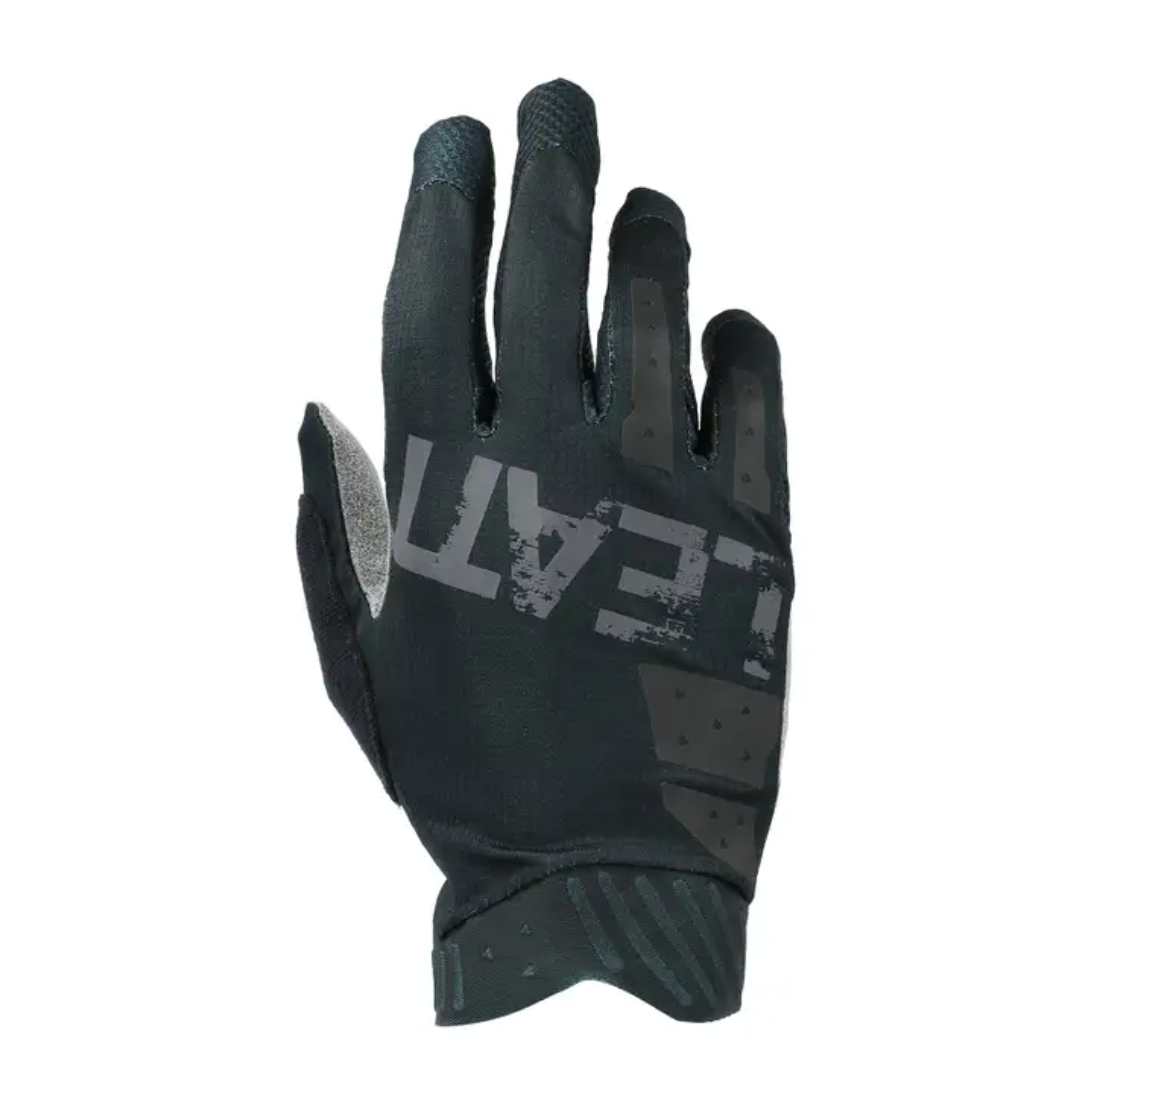 Leatt Protection Glove MTB 1.0 Gripr